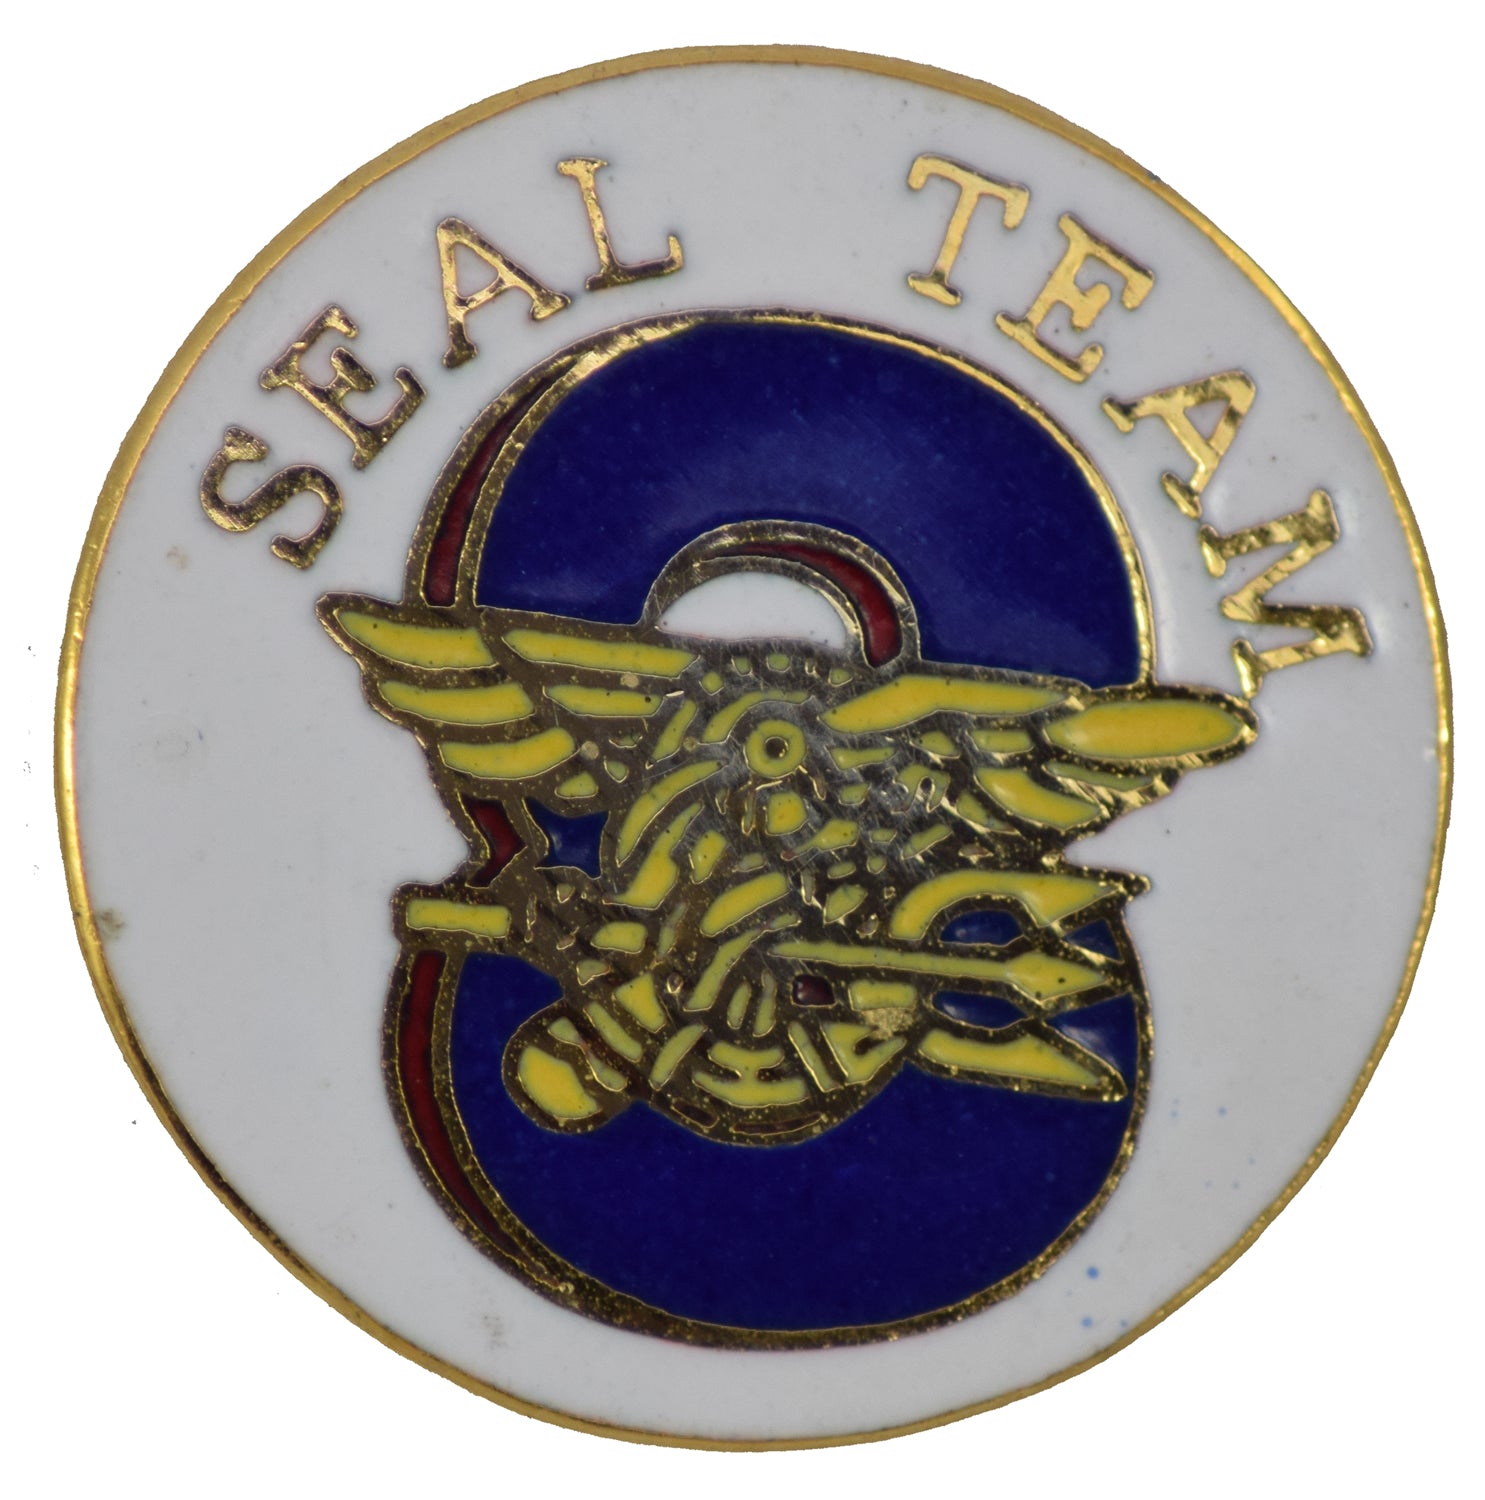 seal team 7 logo